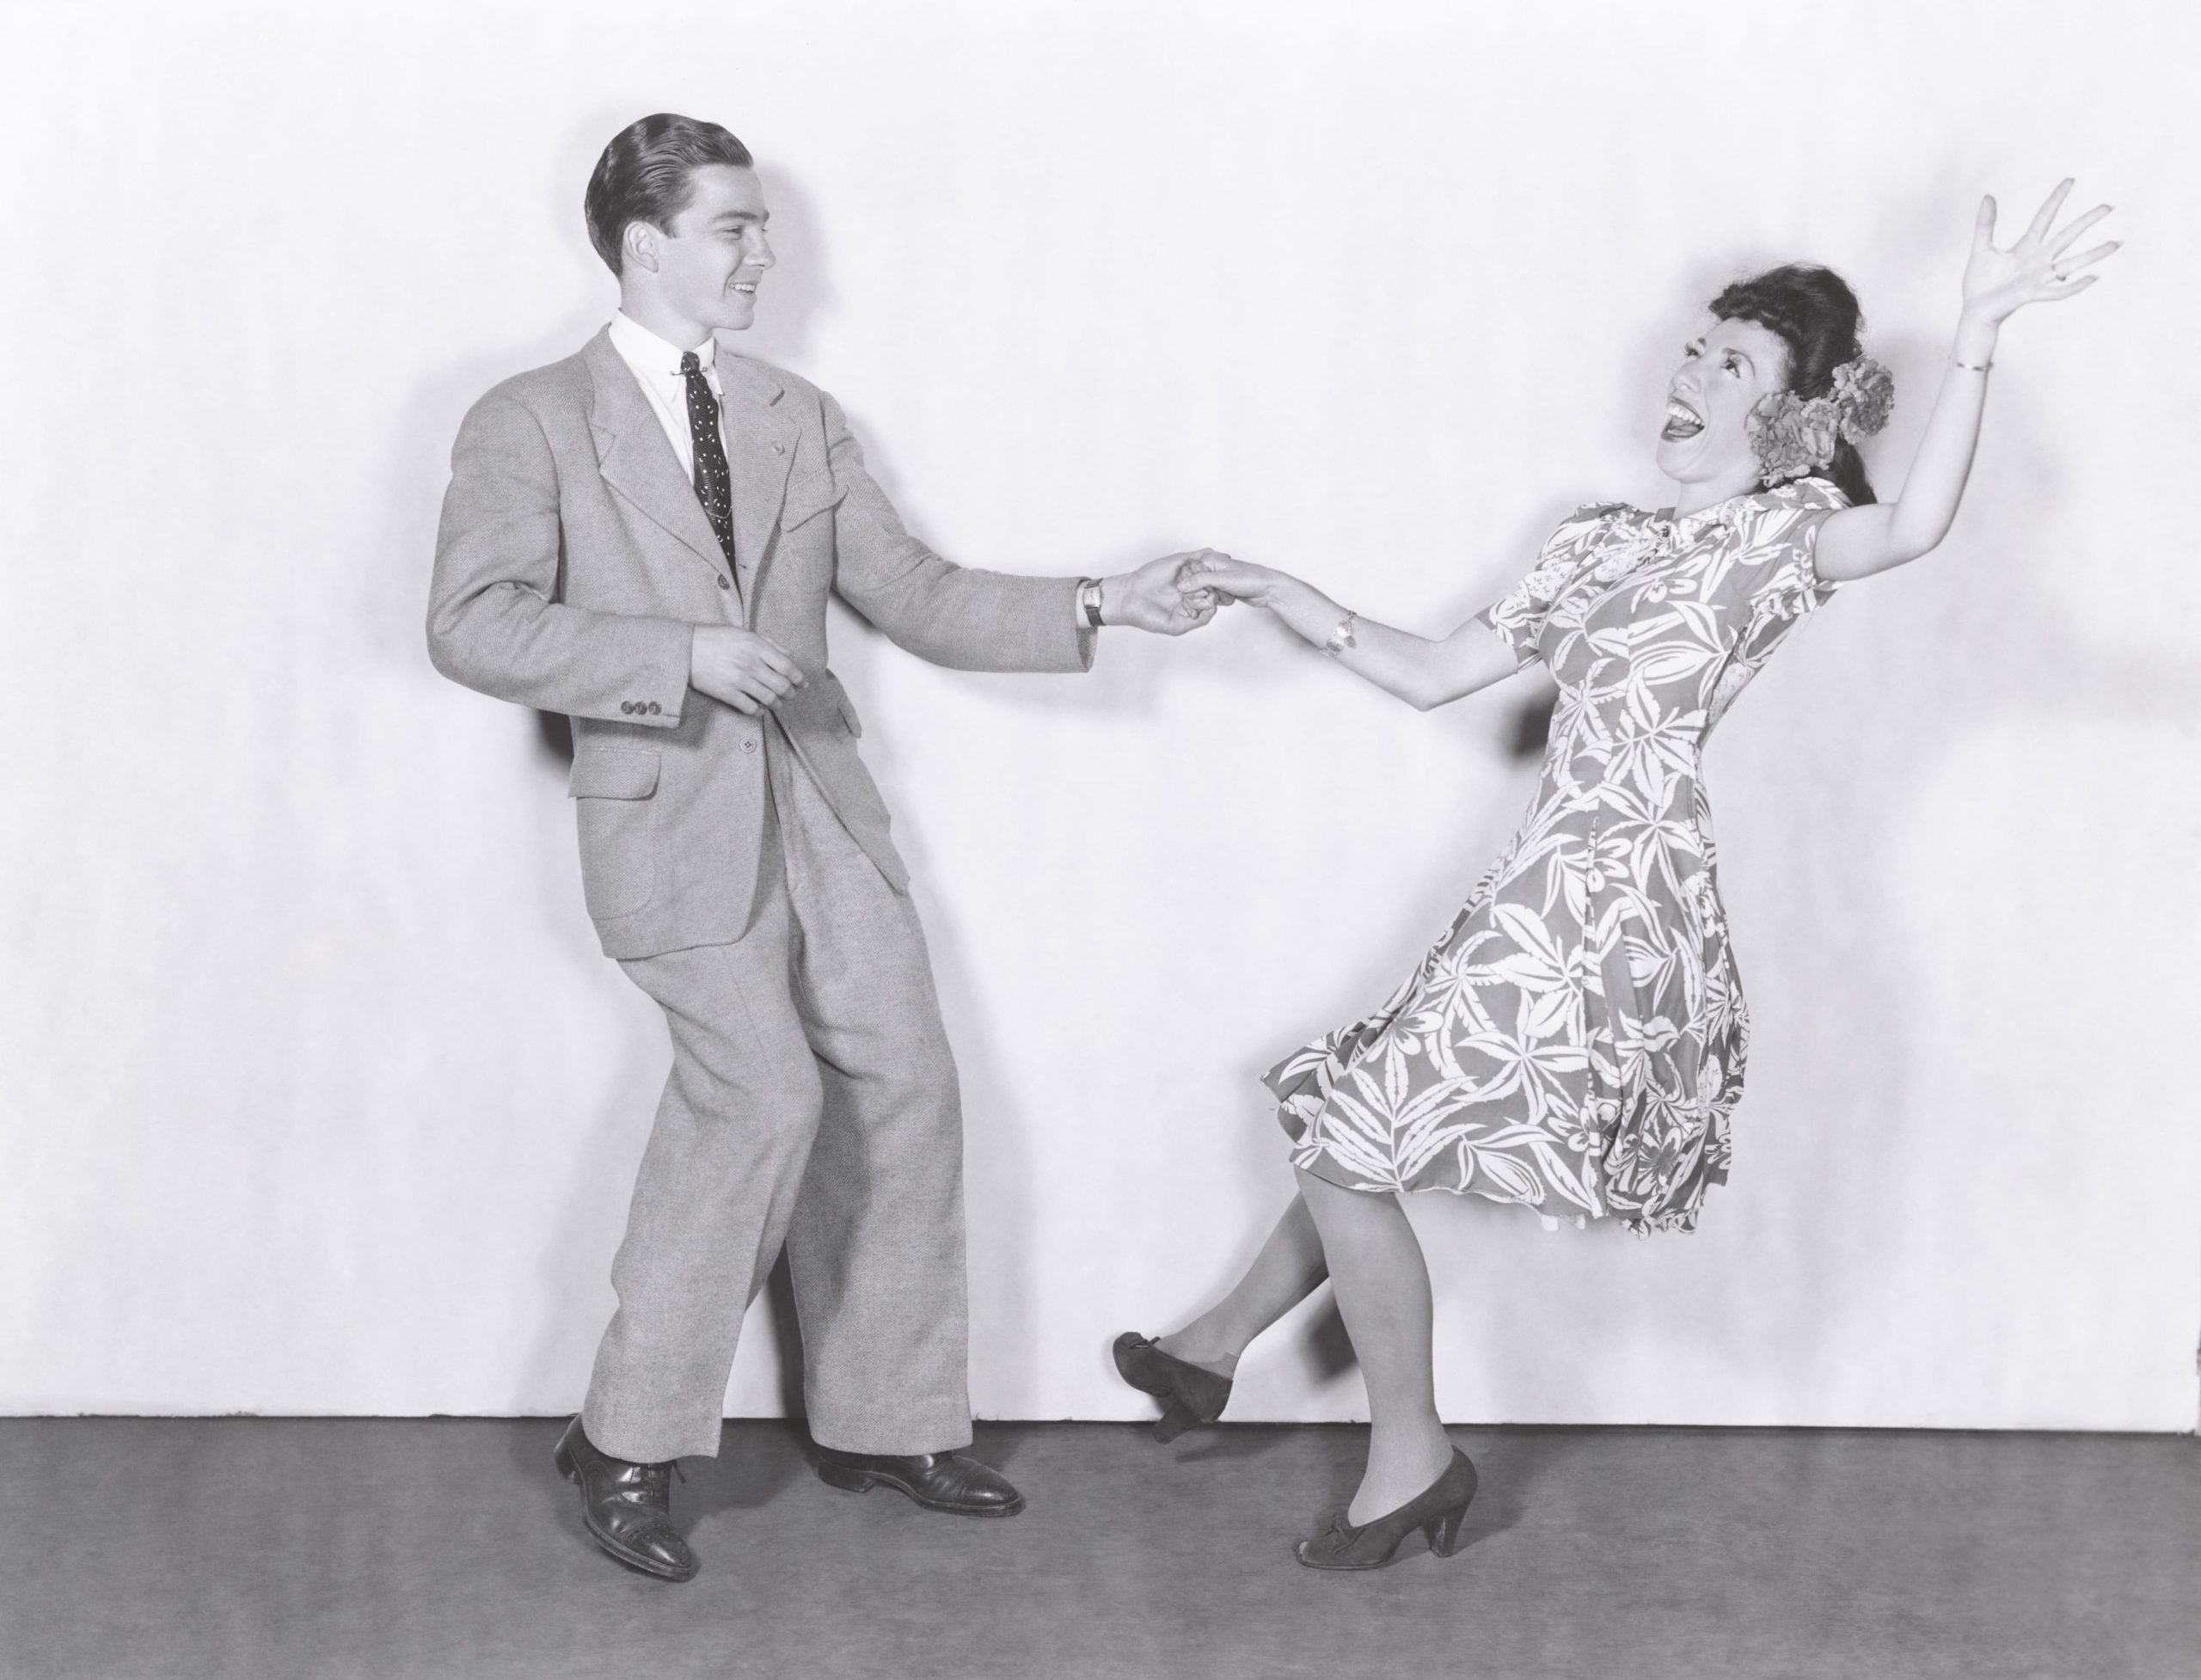 Two people swing dancing